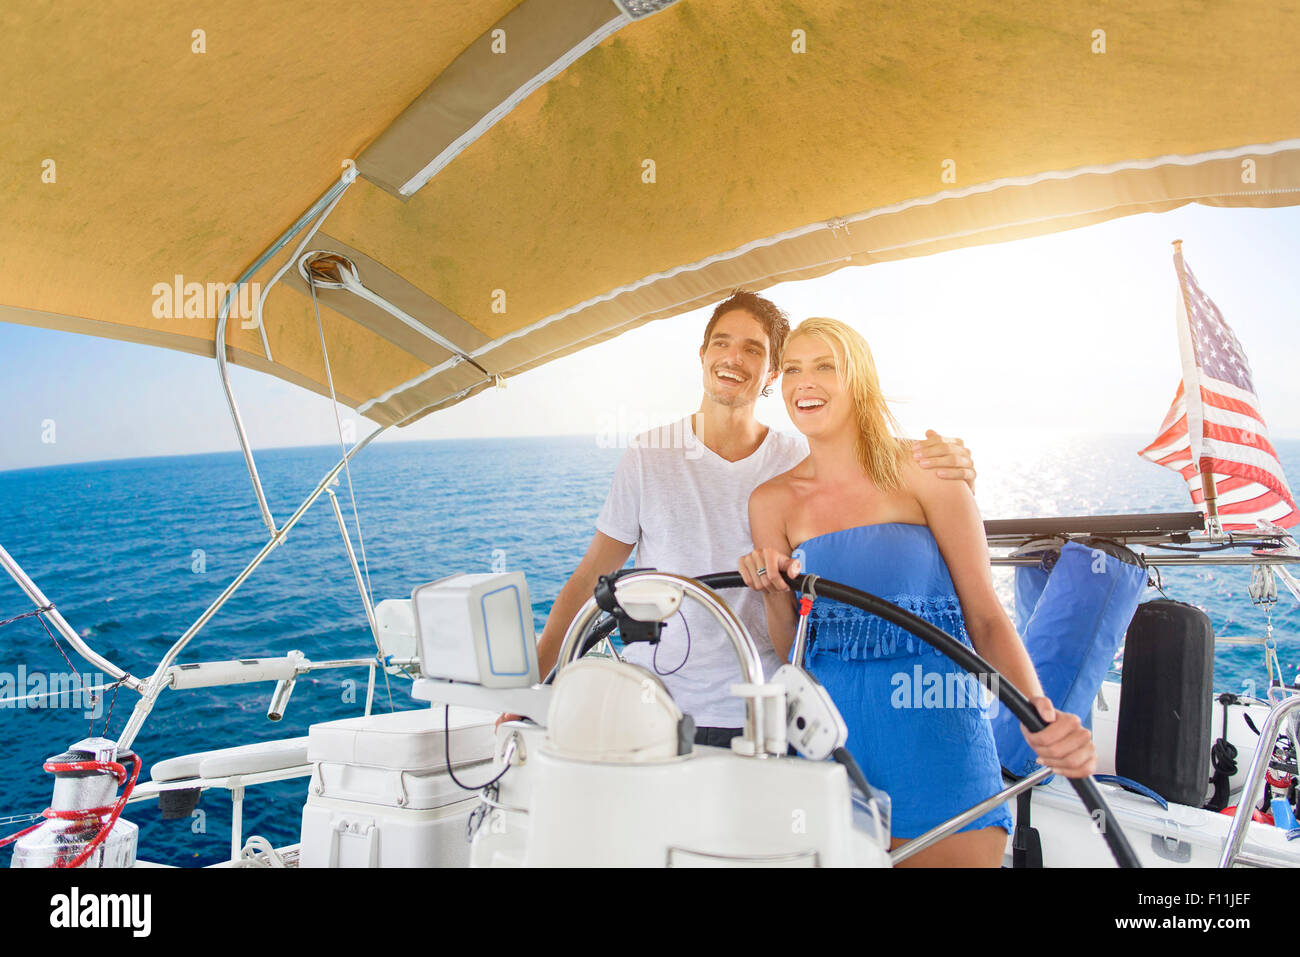 Couple steering boat on ocean Stock Photo